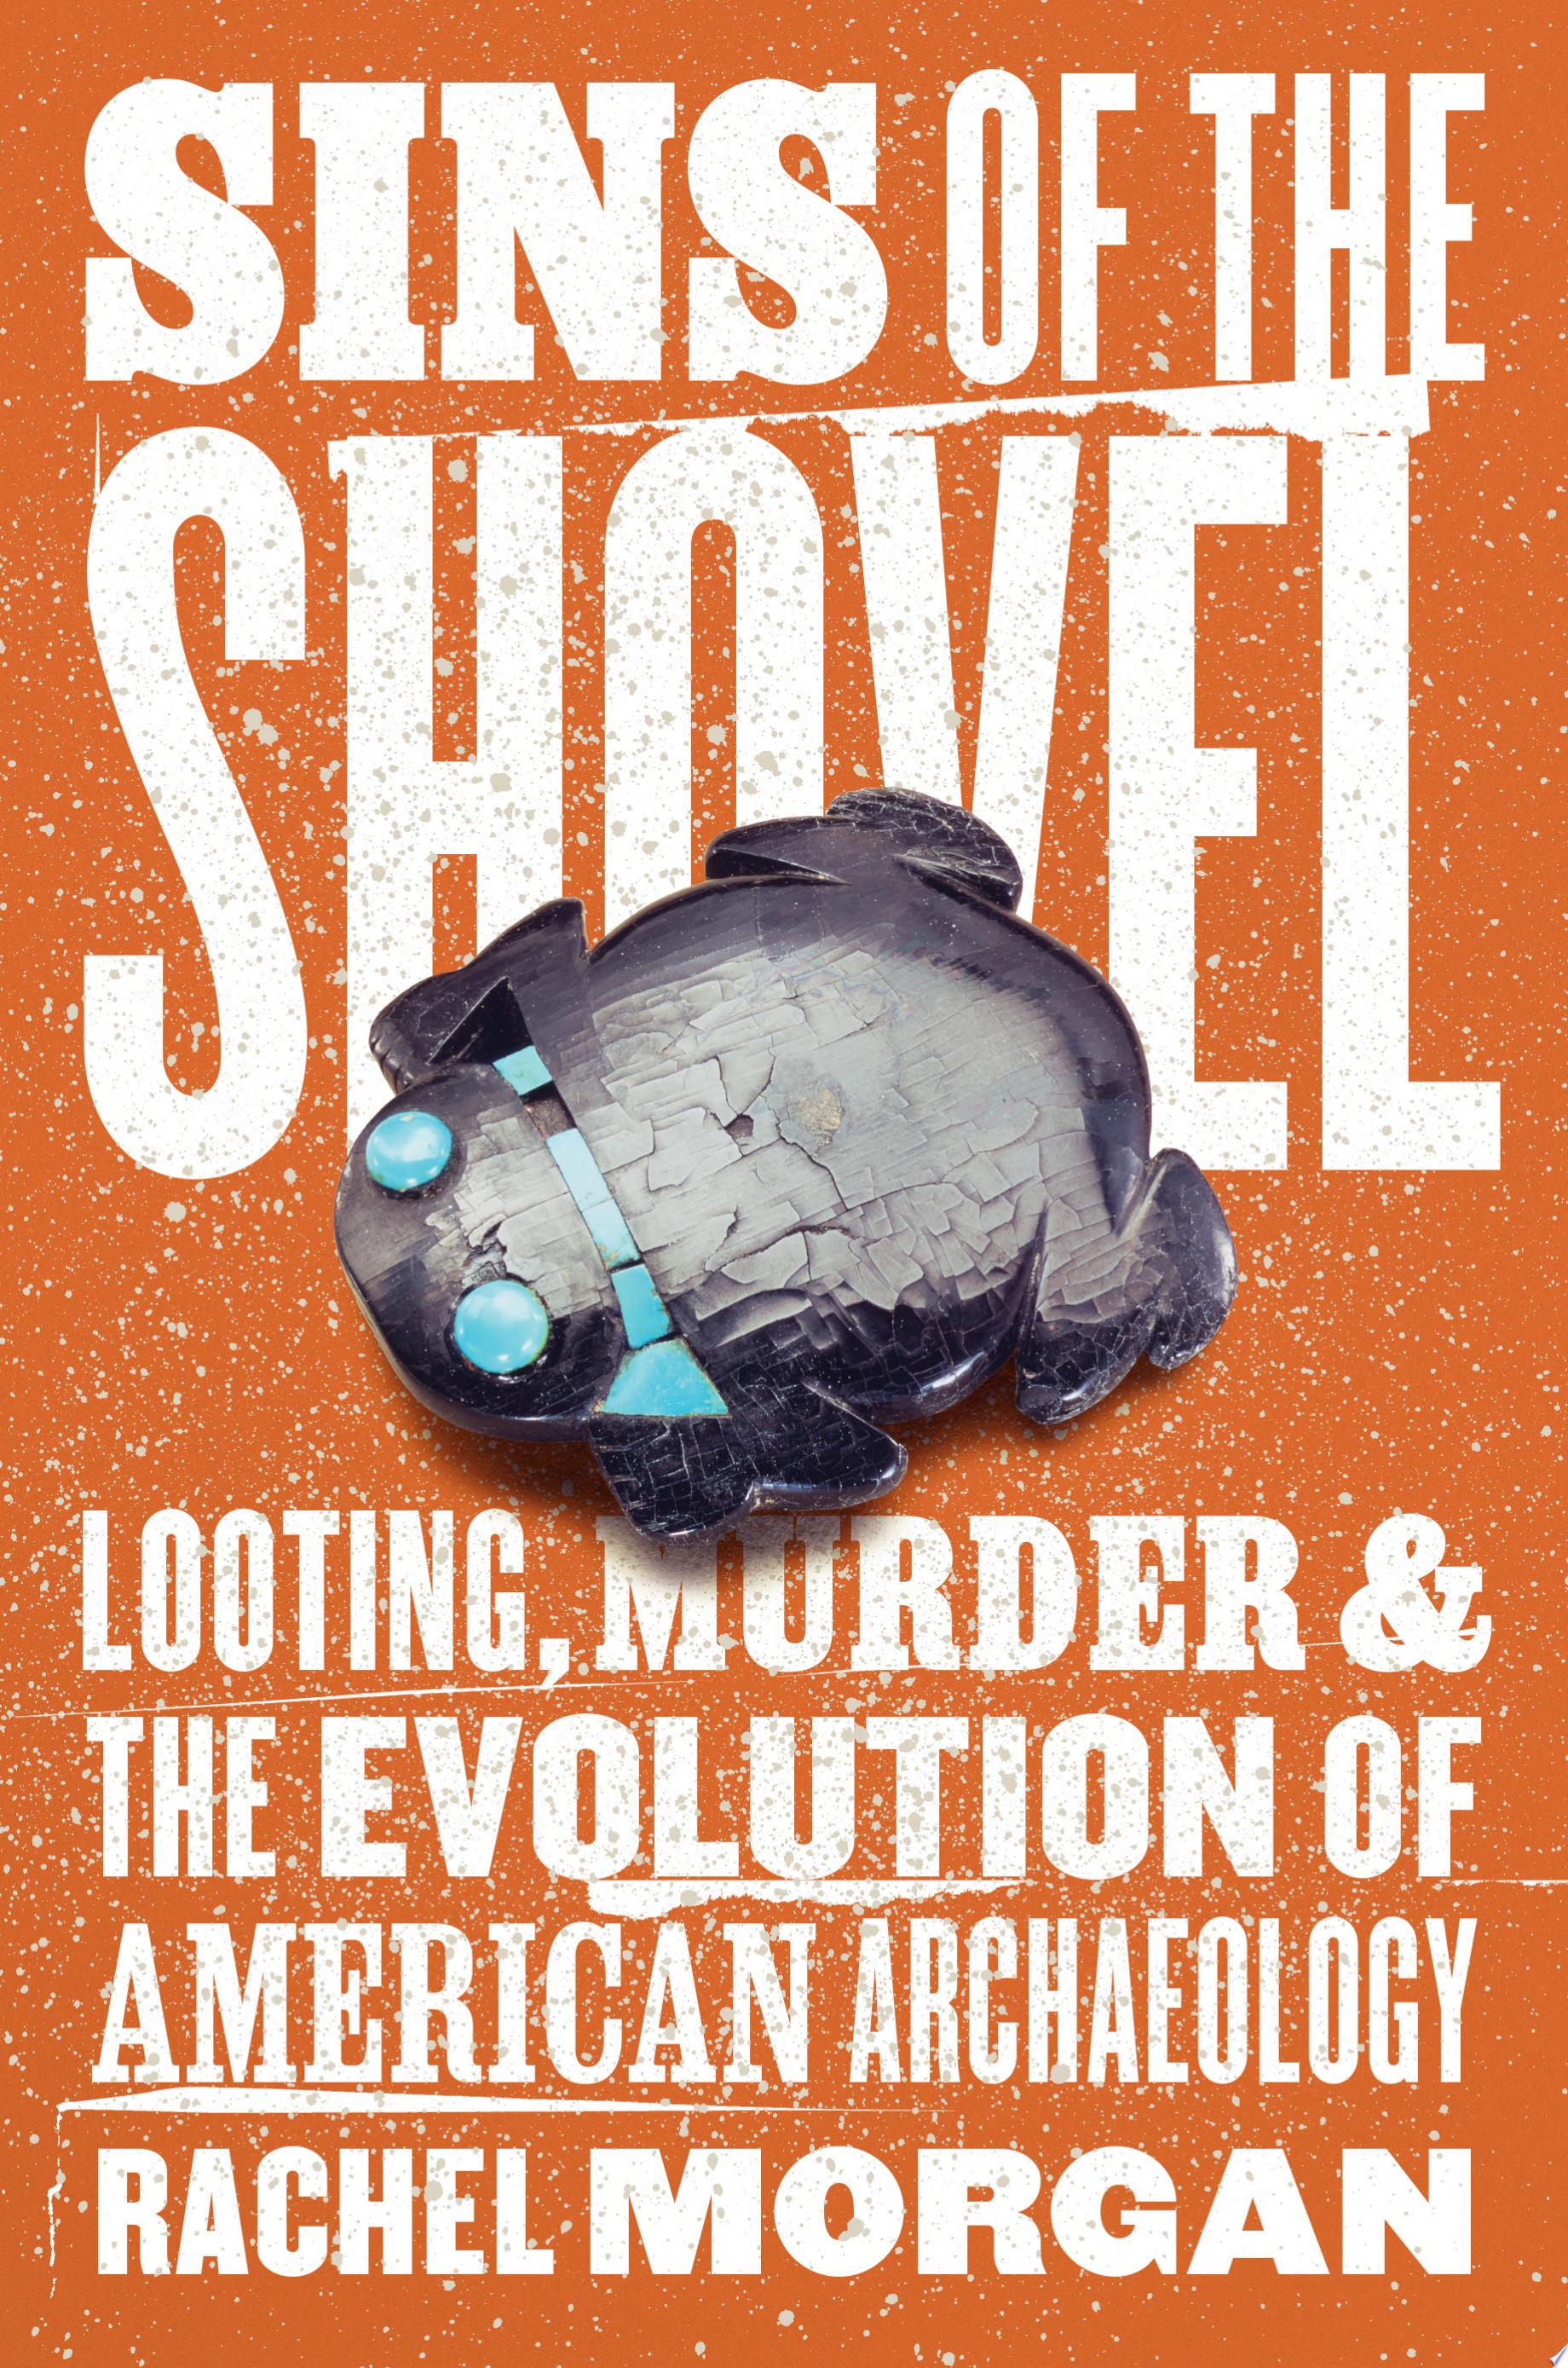 Image for "Sins of the Shovel"